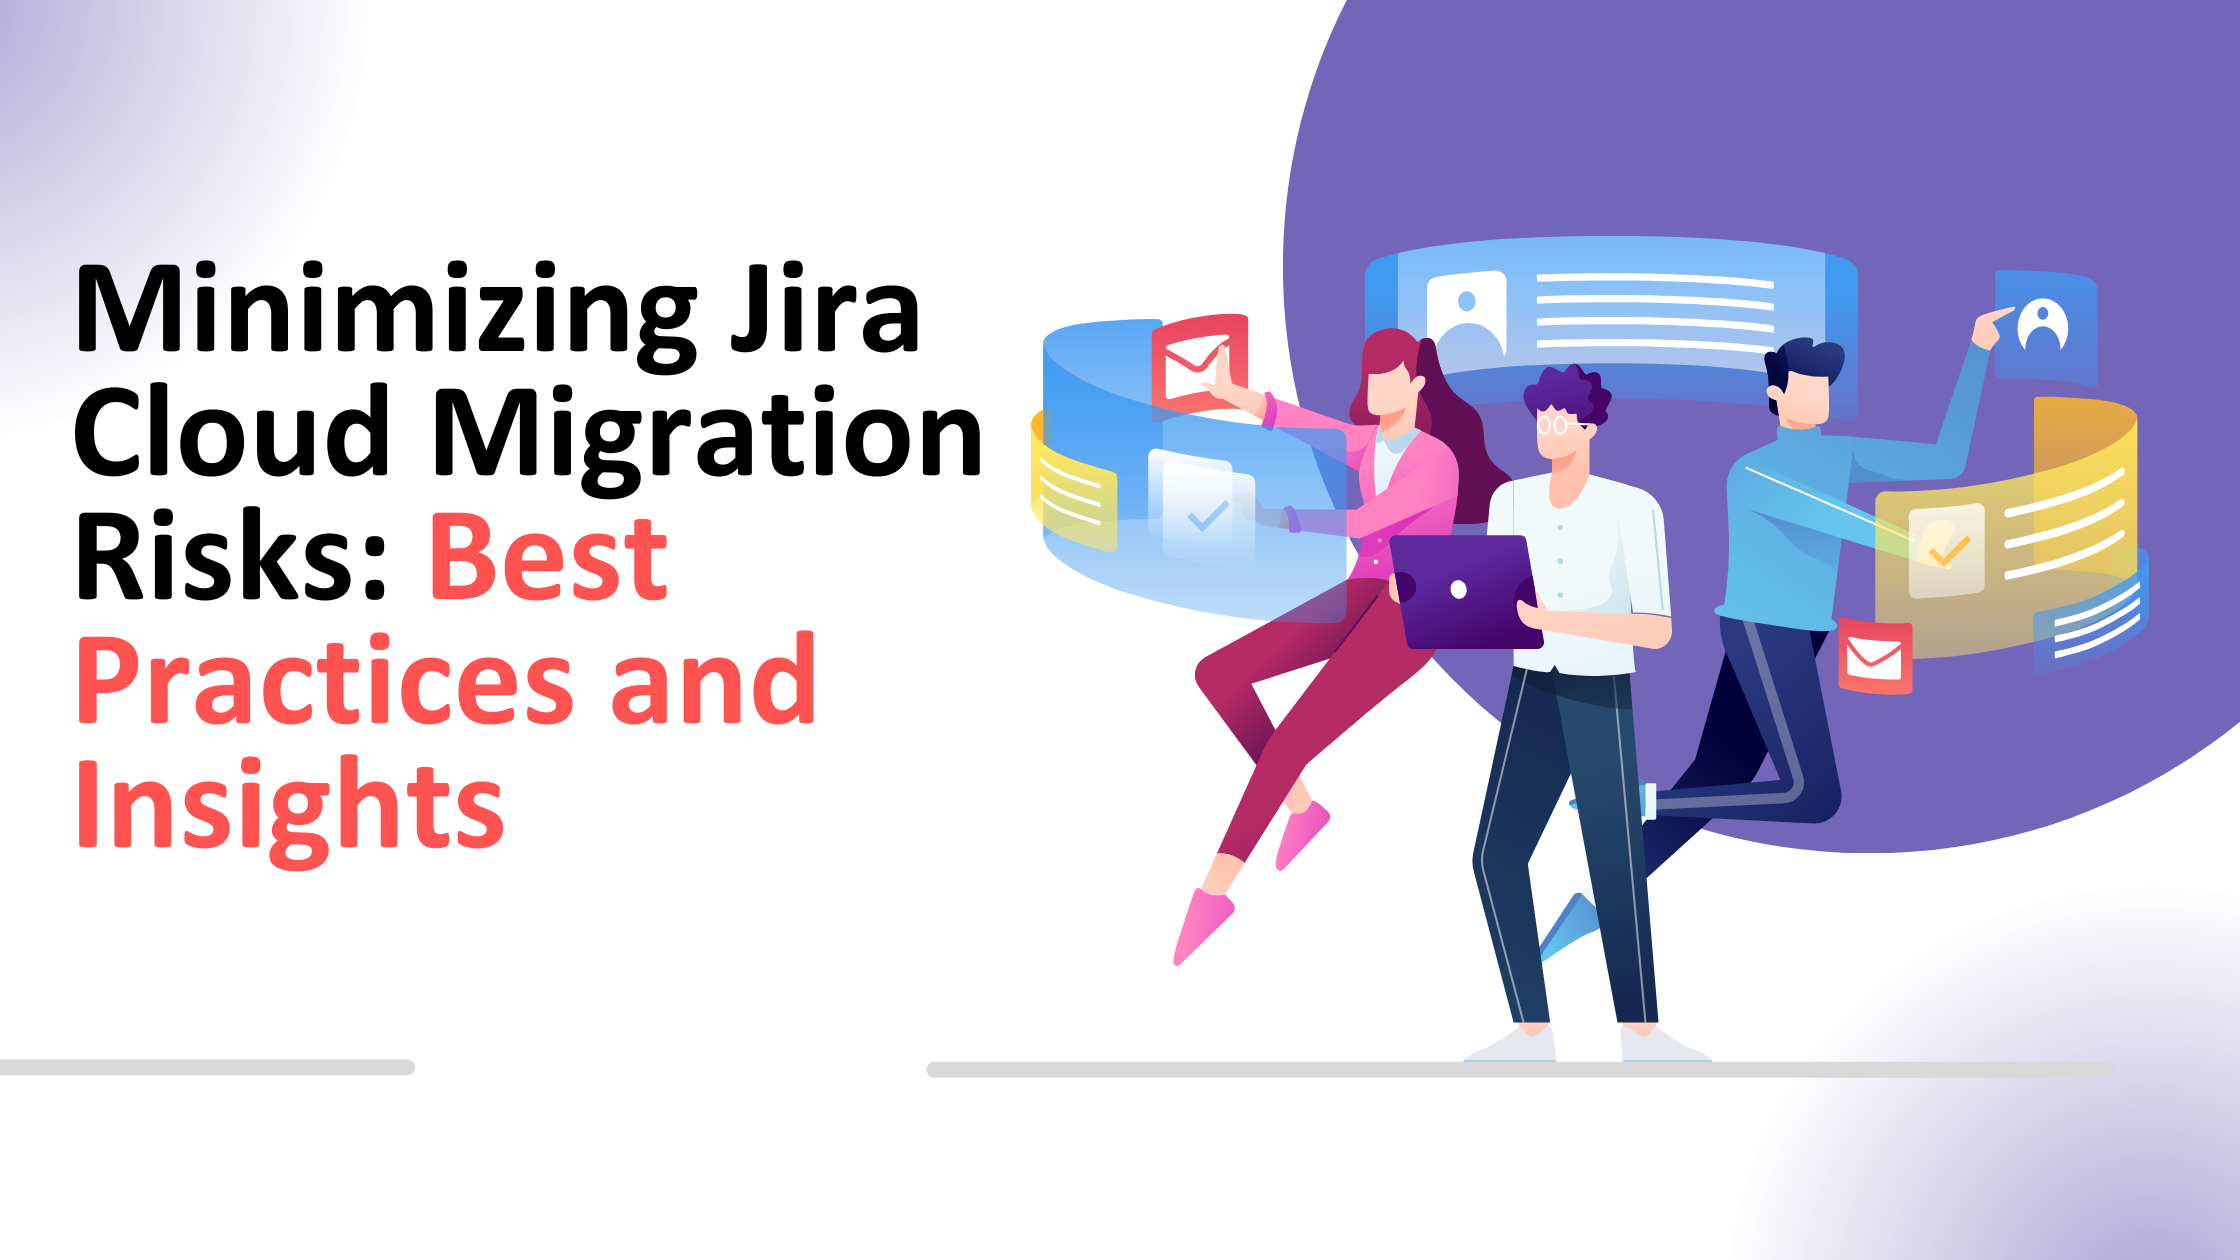 Jira Cloud Migration Risk